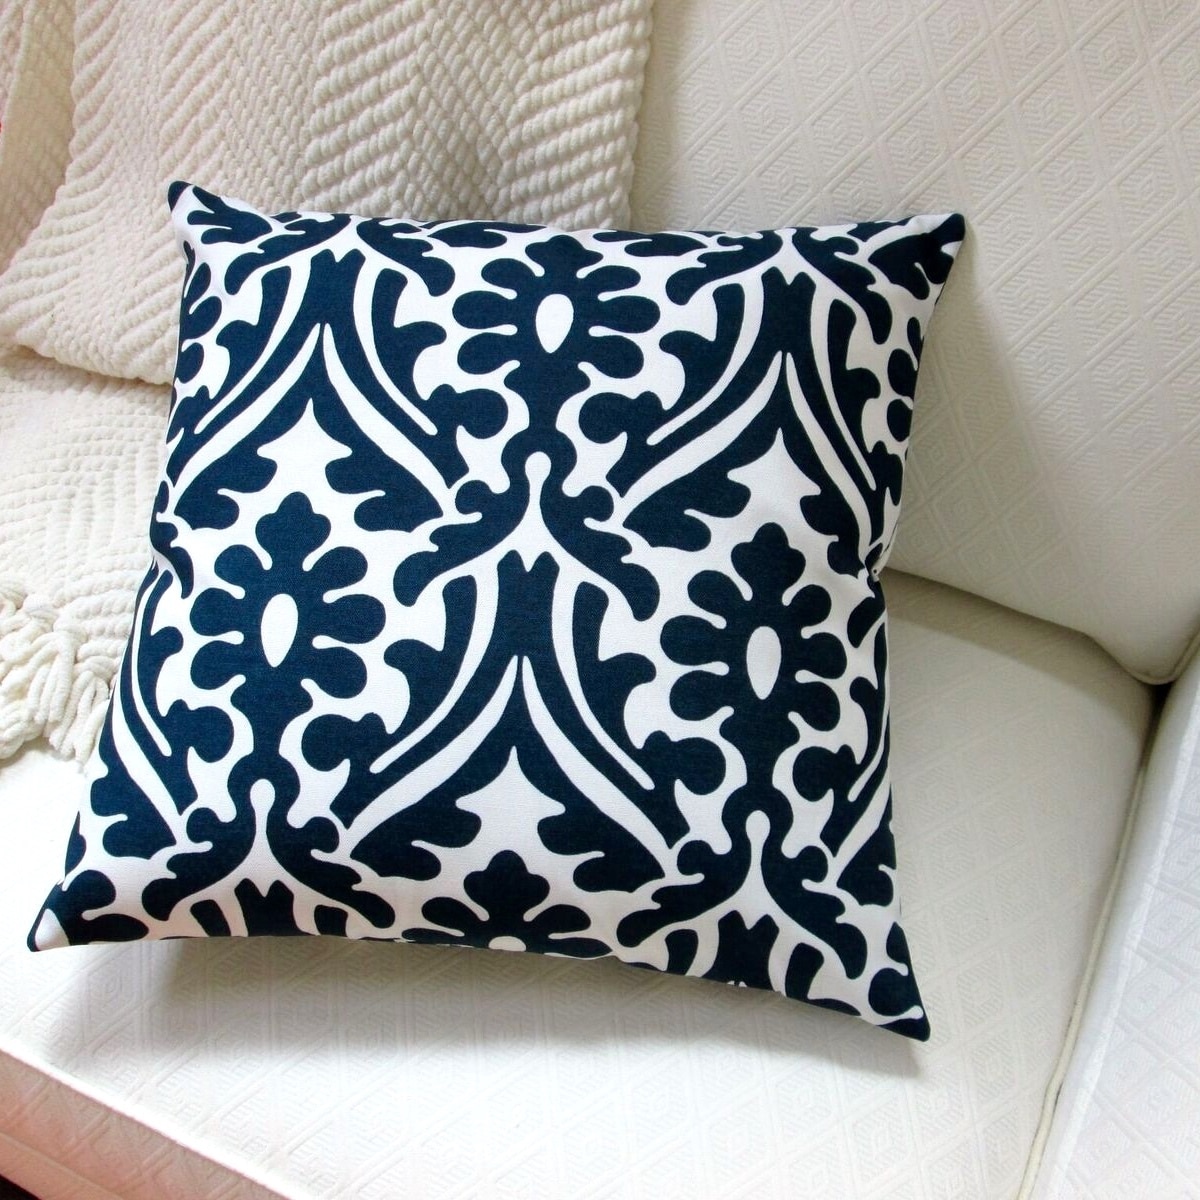 Geometric Print Pillow 18x18 Blue E by design PGN731BL44-18 18 x 18-inch Ananda